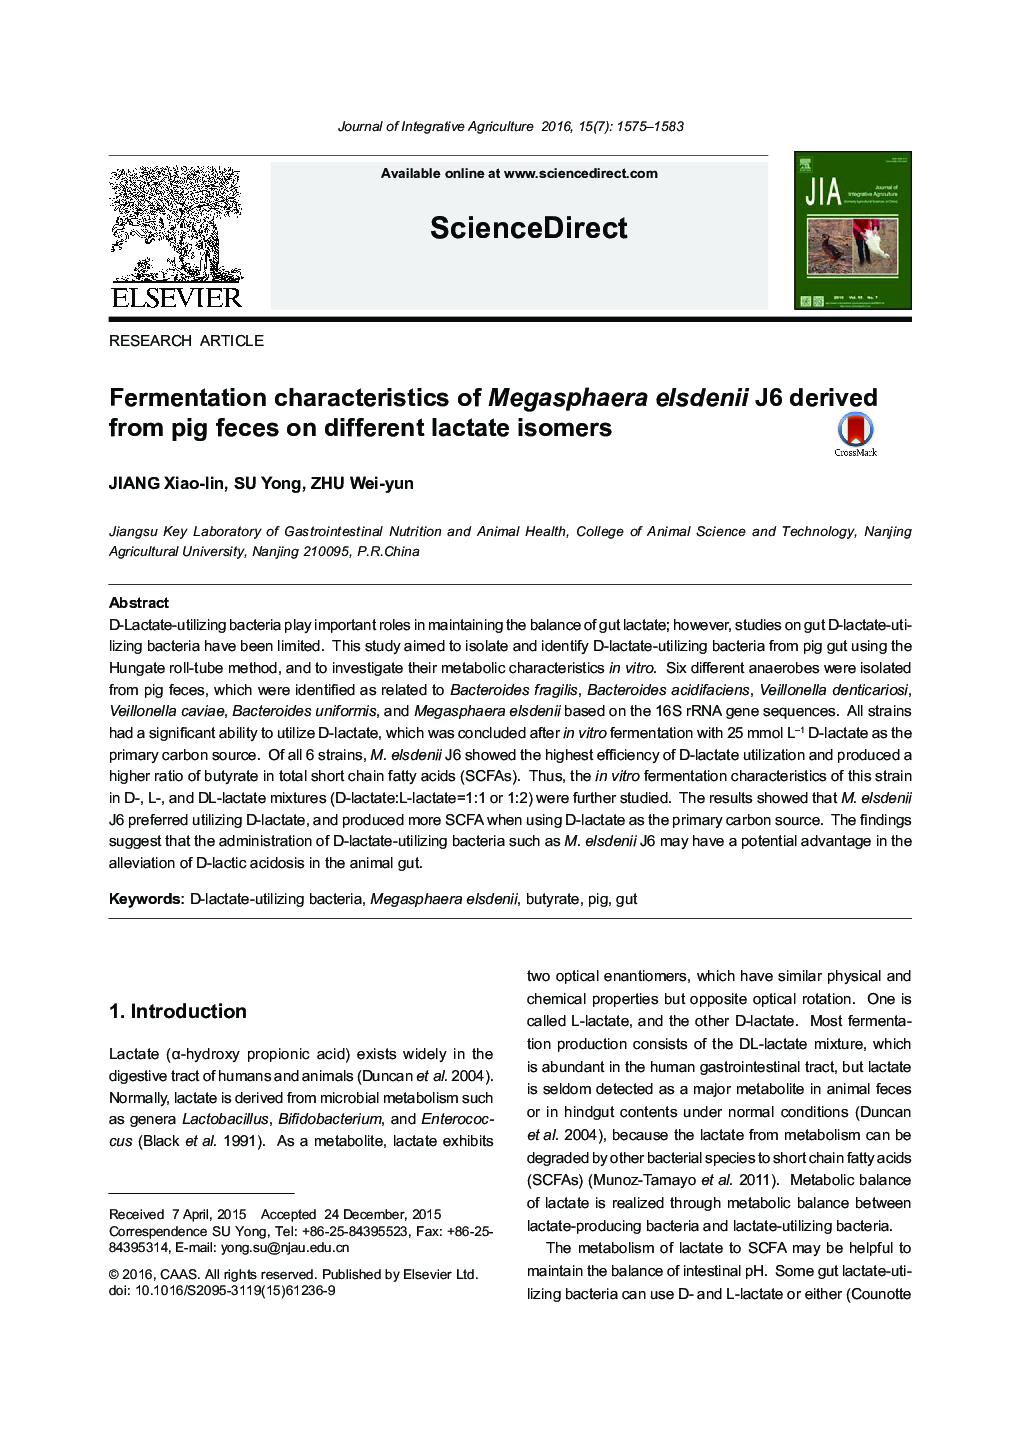 Fermentation characteristics of Megasphaera elsdenii J6 derived from pig feces on different lactate isomers